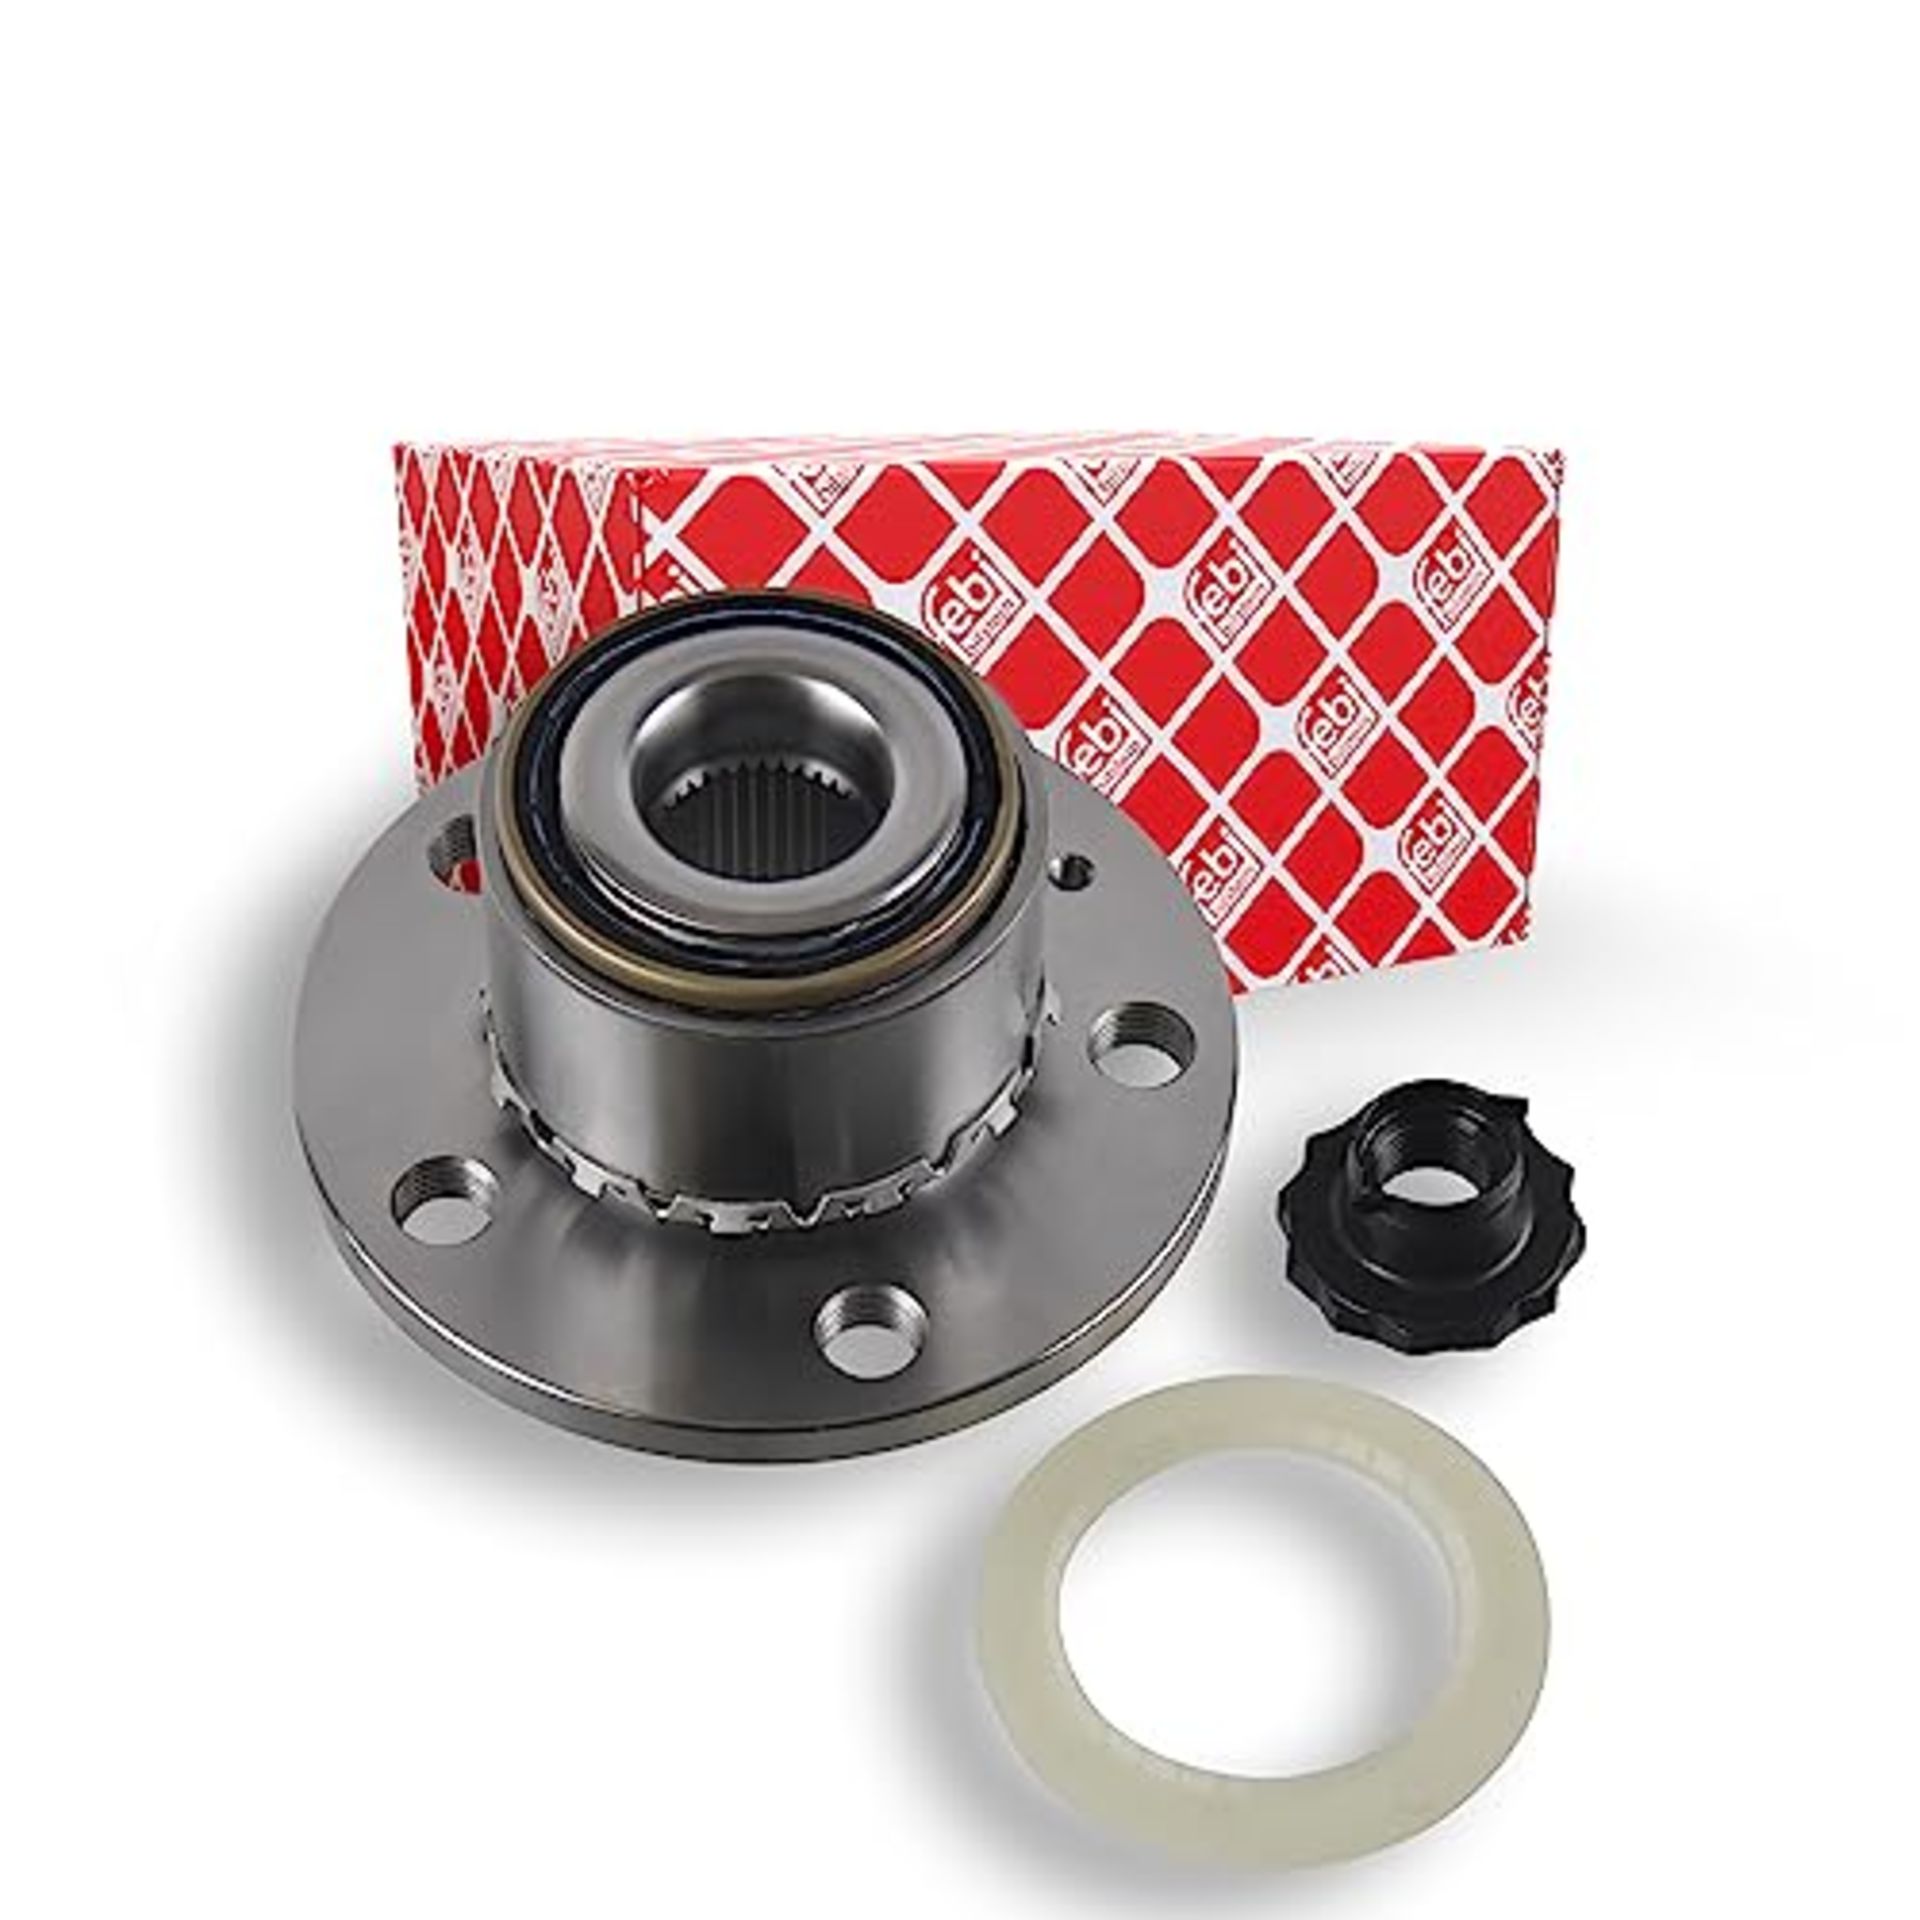 Febi Bilstein 24414 wheel bearing kit with wheel hub, ABS impulse ring and axle nut, 1